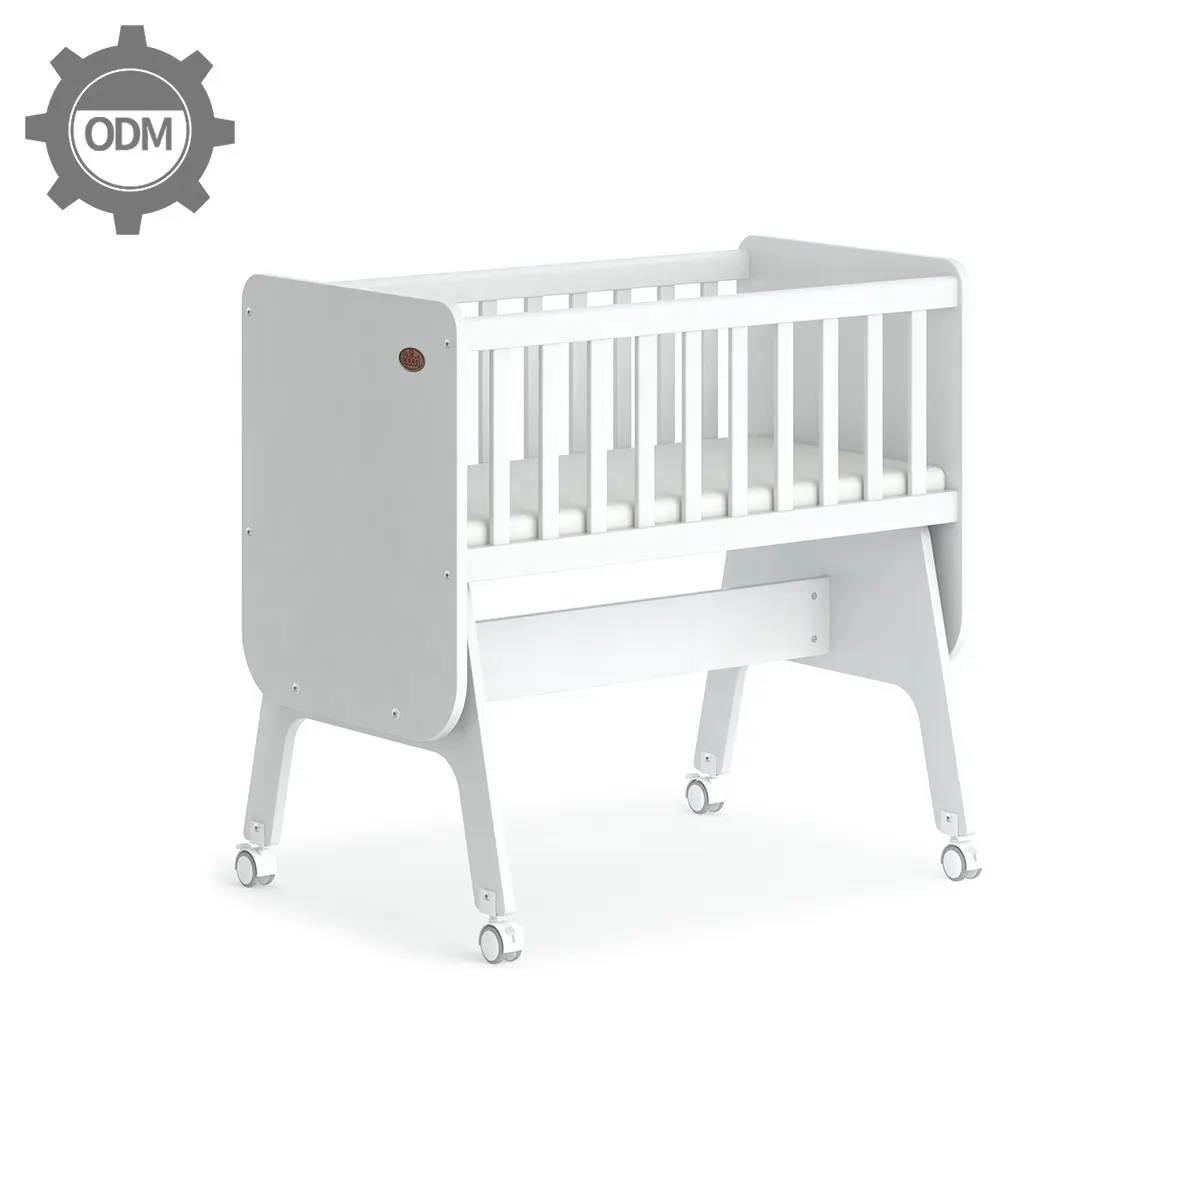 rocking cradle sleep OBM manufacturer pine wood white baby rocking cradle rocker wooden baby furniture